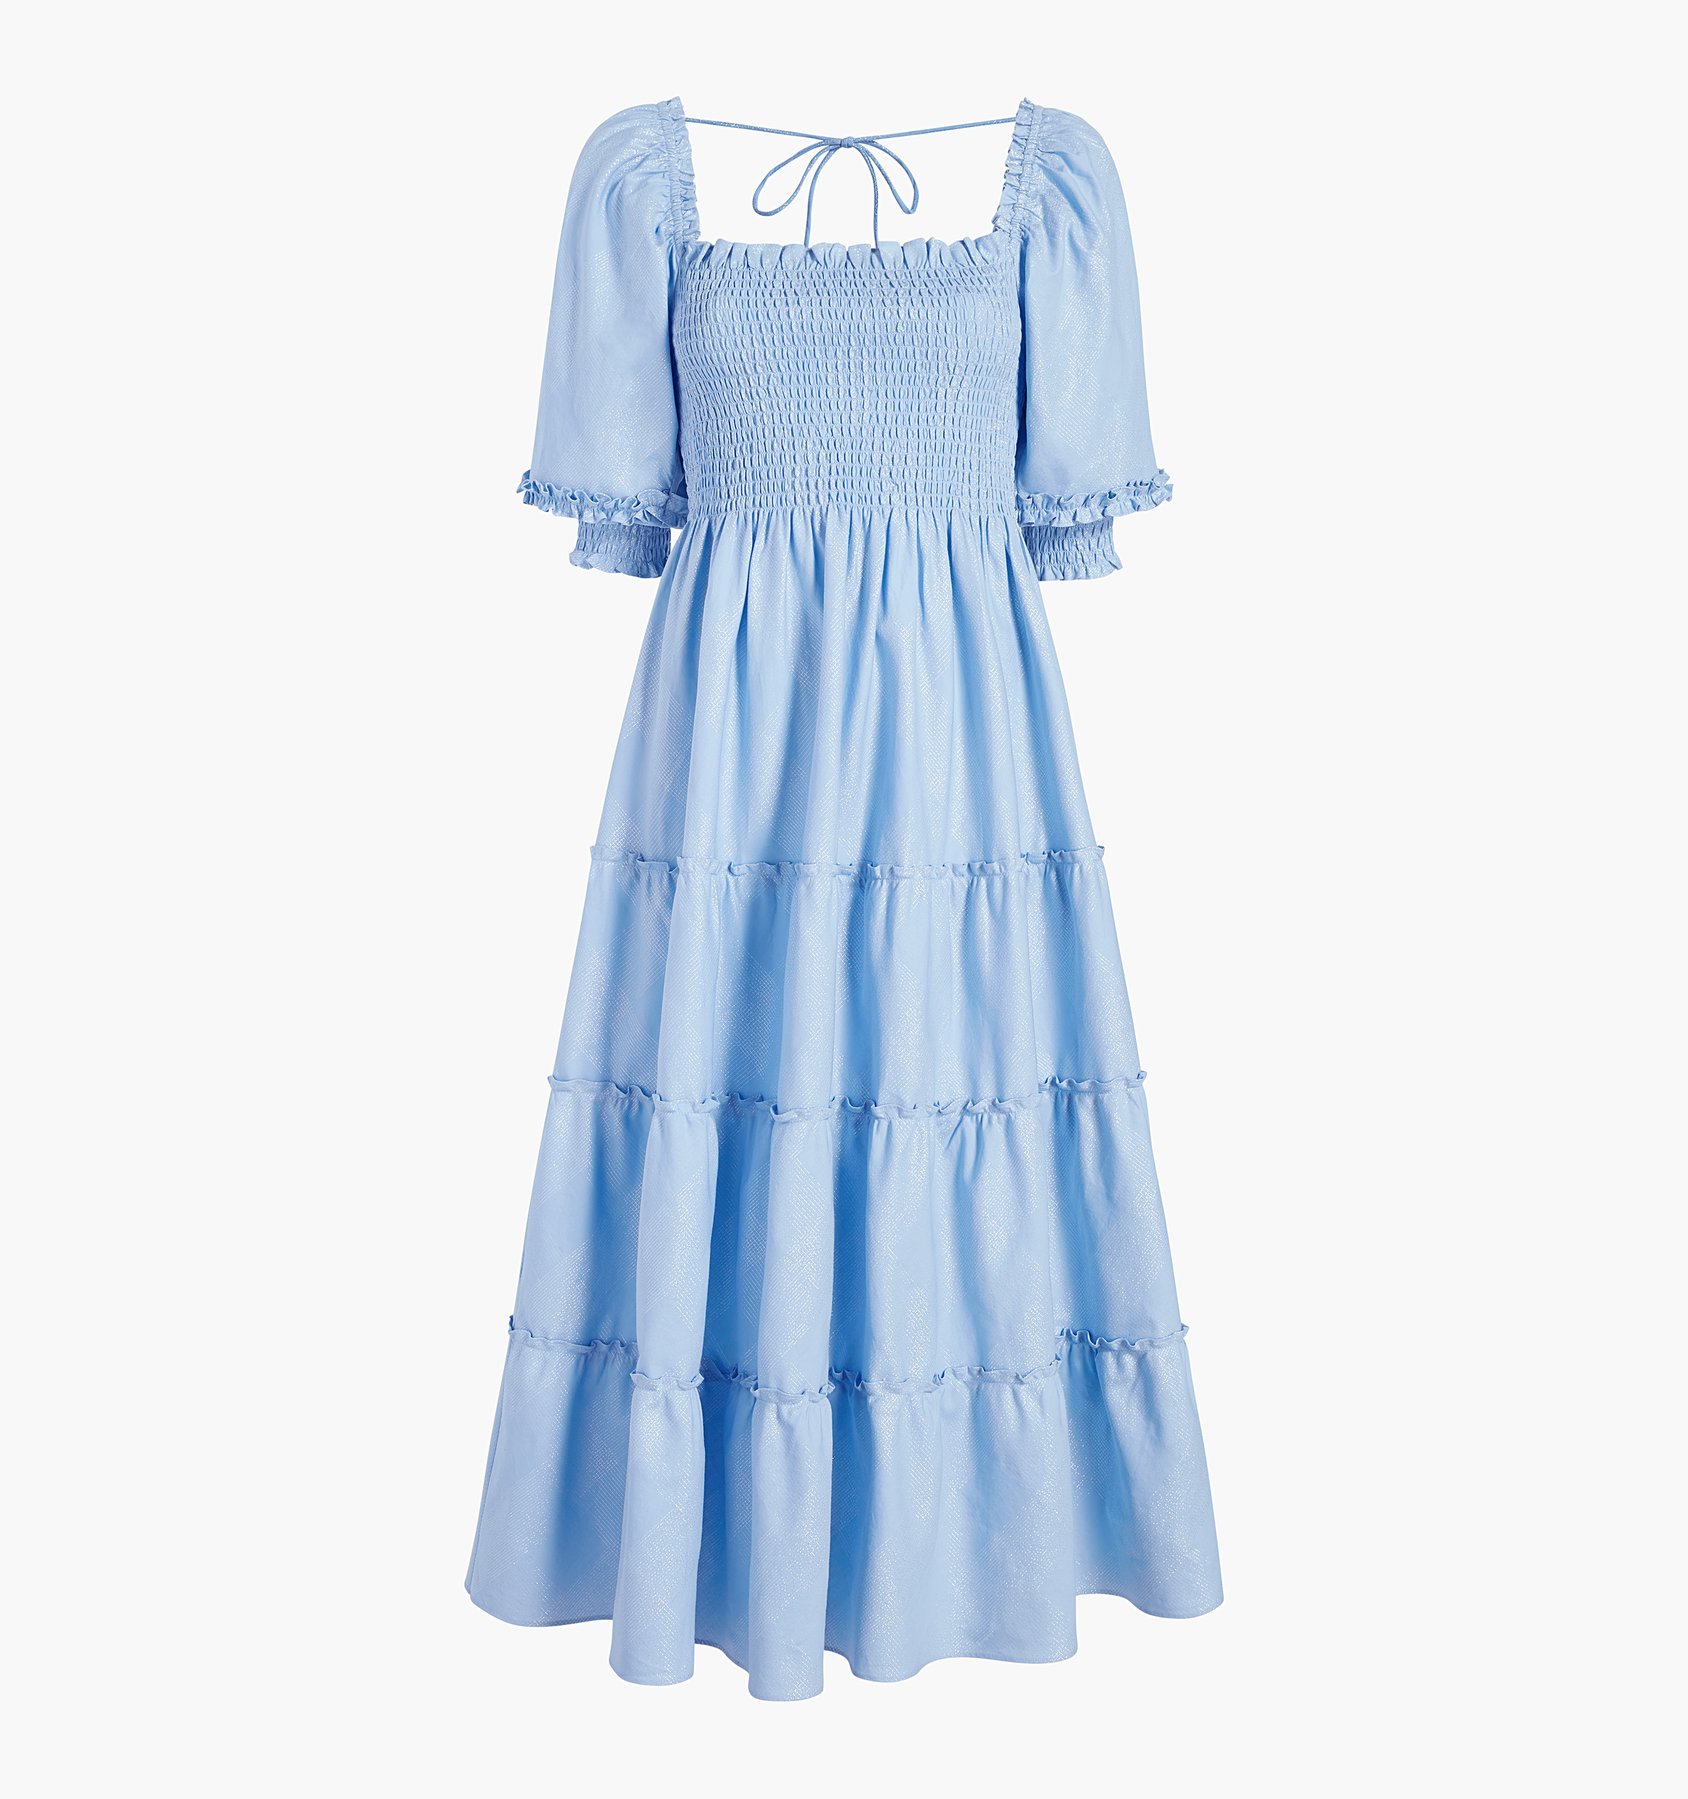 Hill House Lesli Nap Dress | Recent Finds 4/3